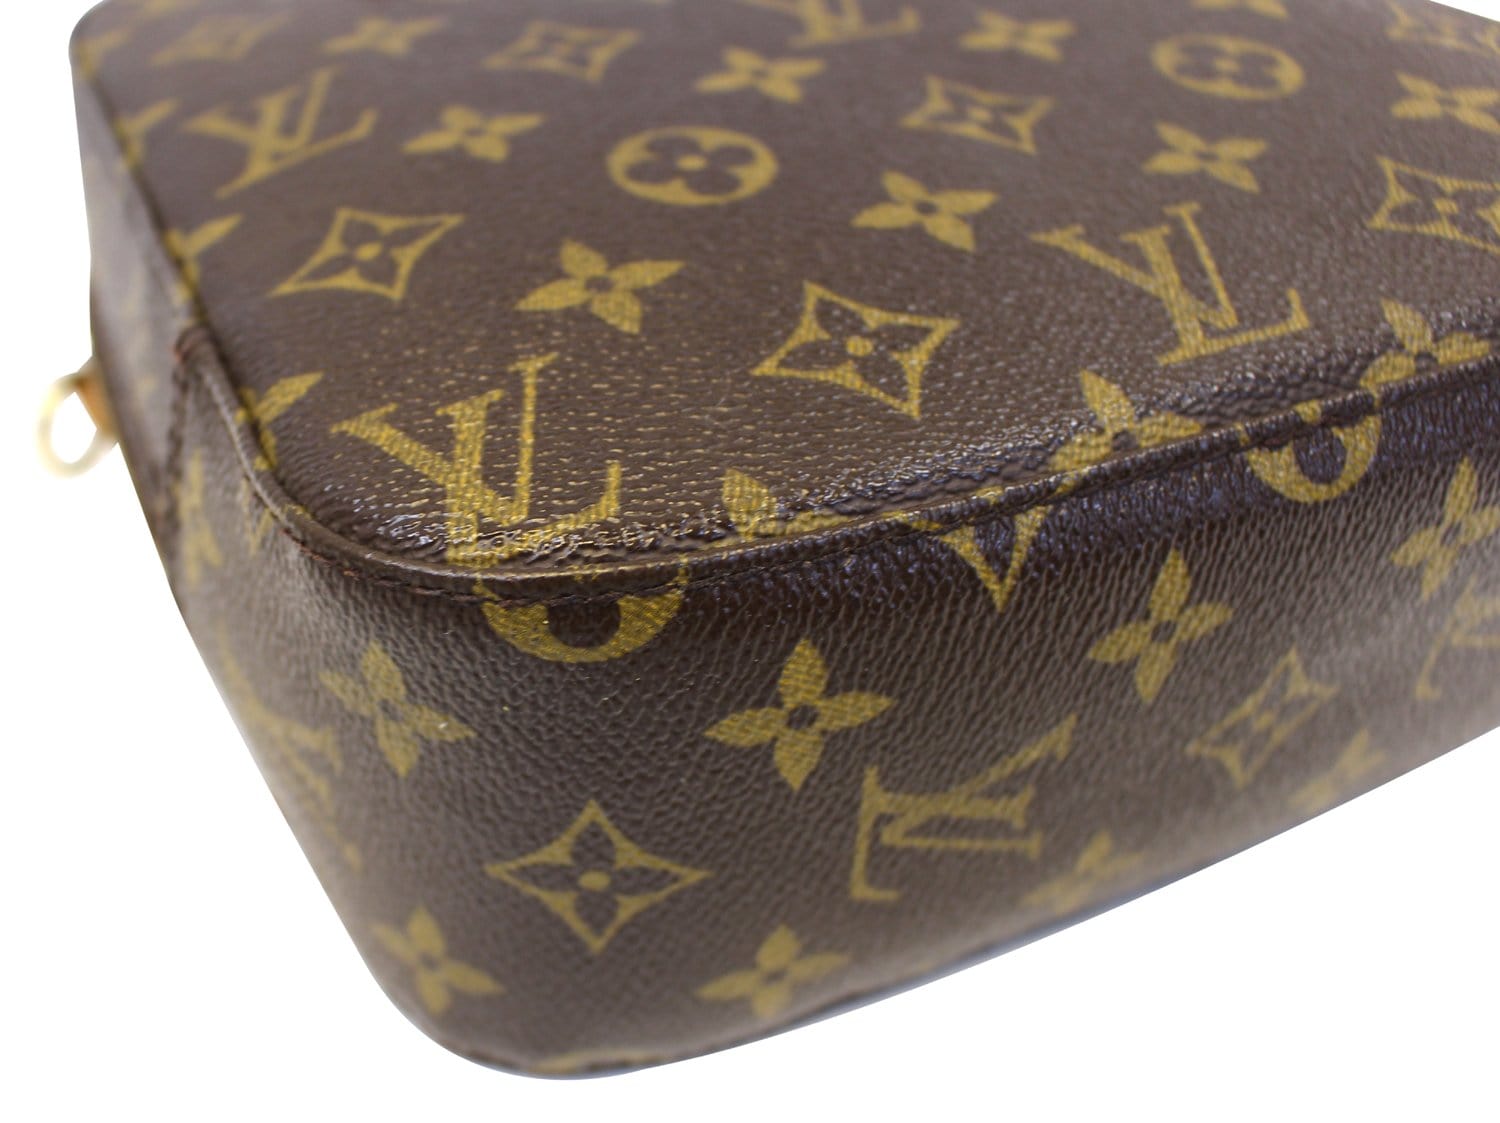 Louis Vuitton Monogram Spontini M47500 2WAY Handbag 0191 LOUIS VUITTON